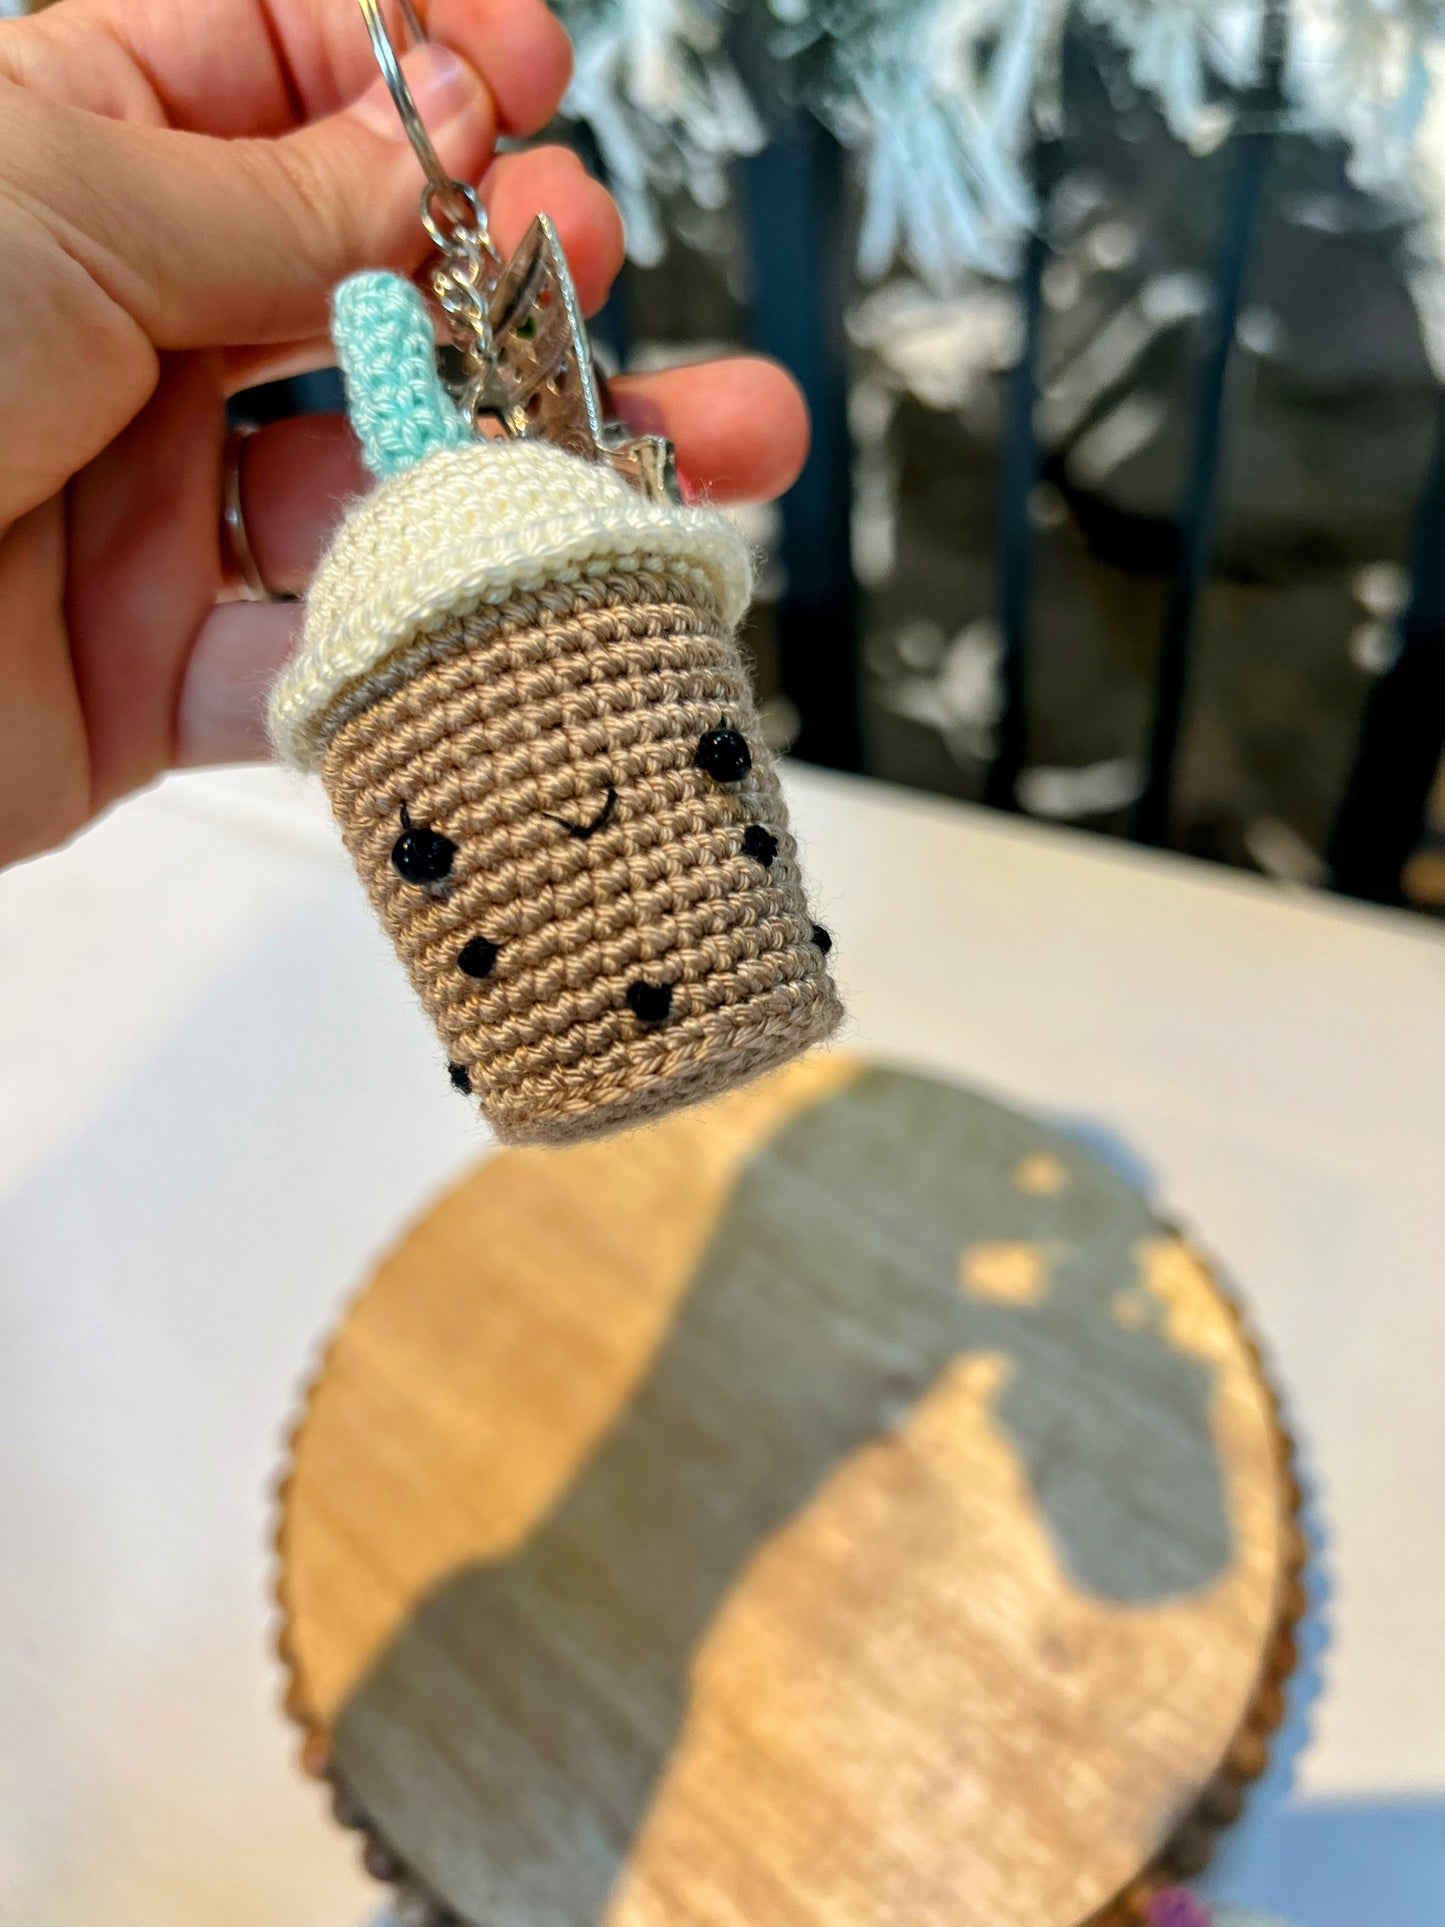 Stuffed Boba Drink Keychain - Crochet Knitted Amigurumi Toy